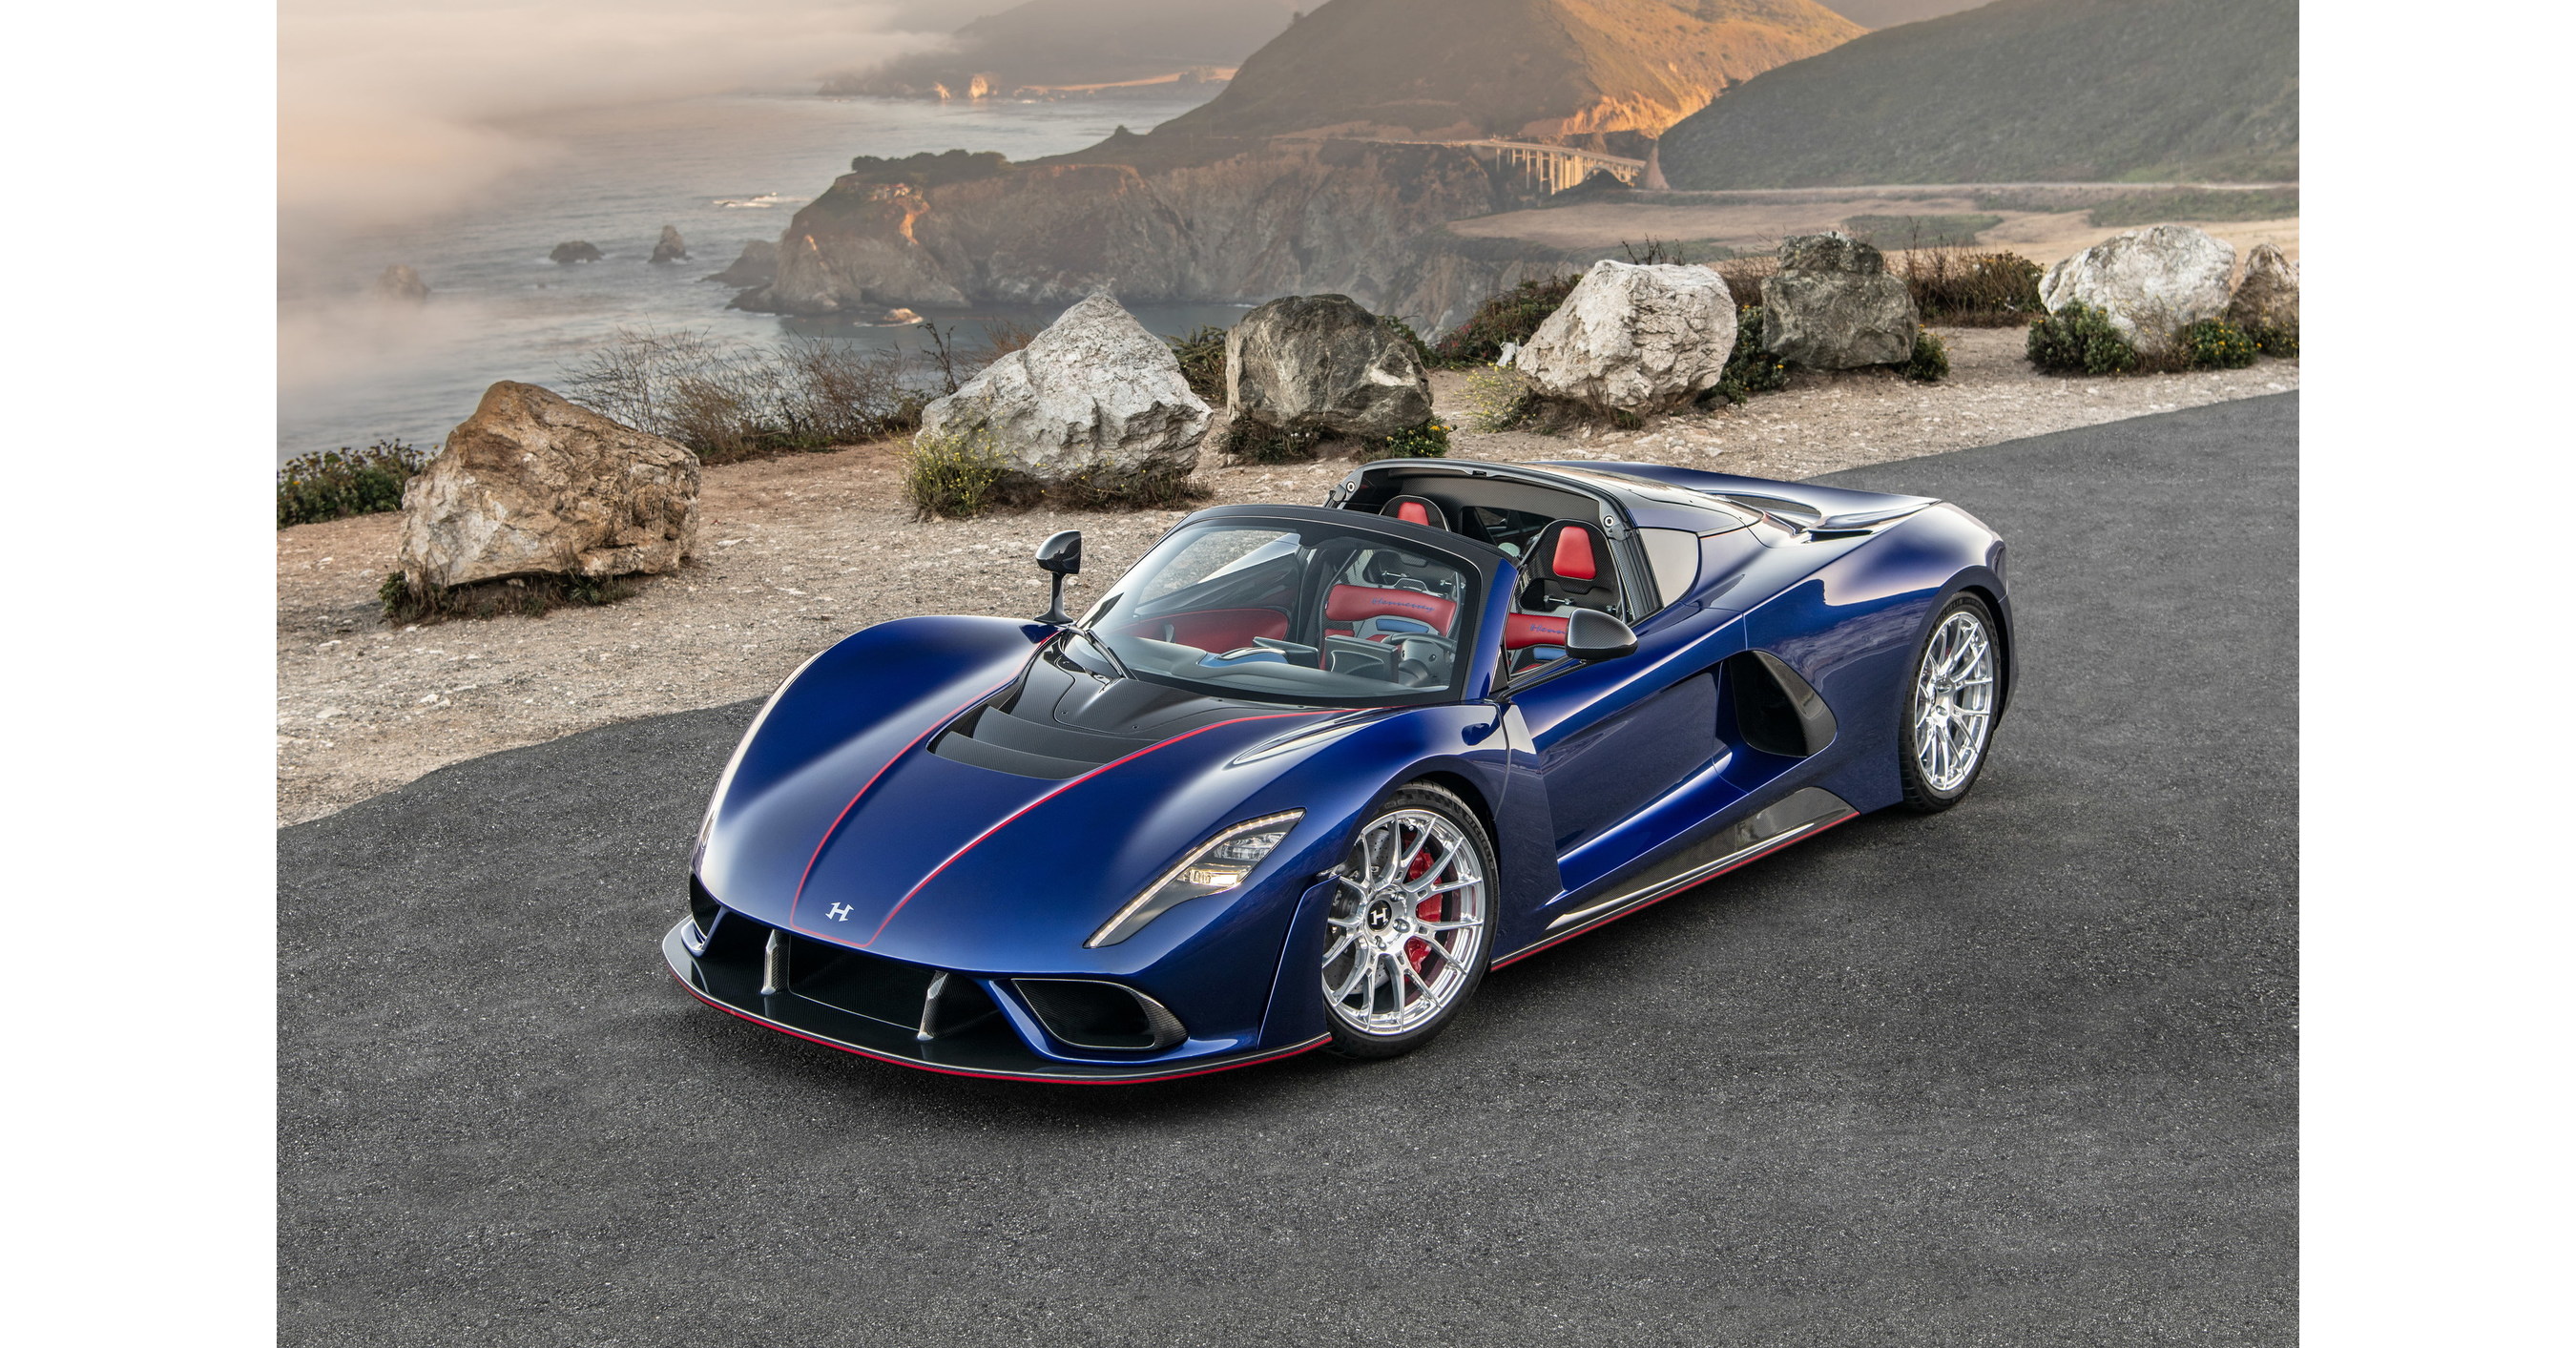 Hennessey Venom F5: new images and design video - Car Body Design